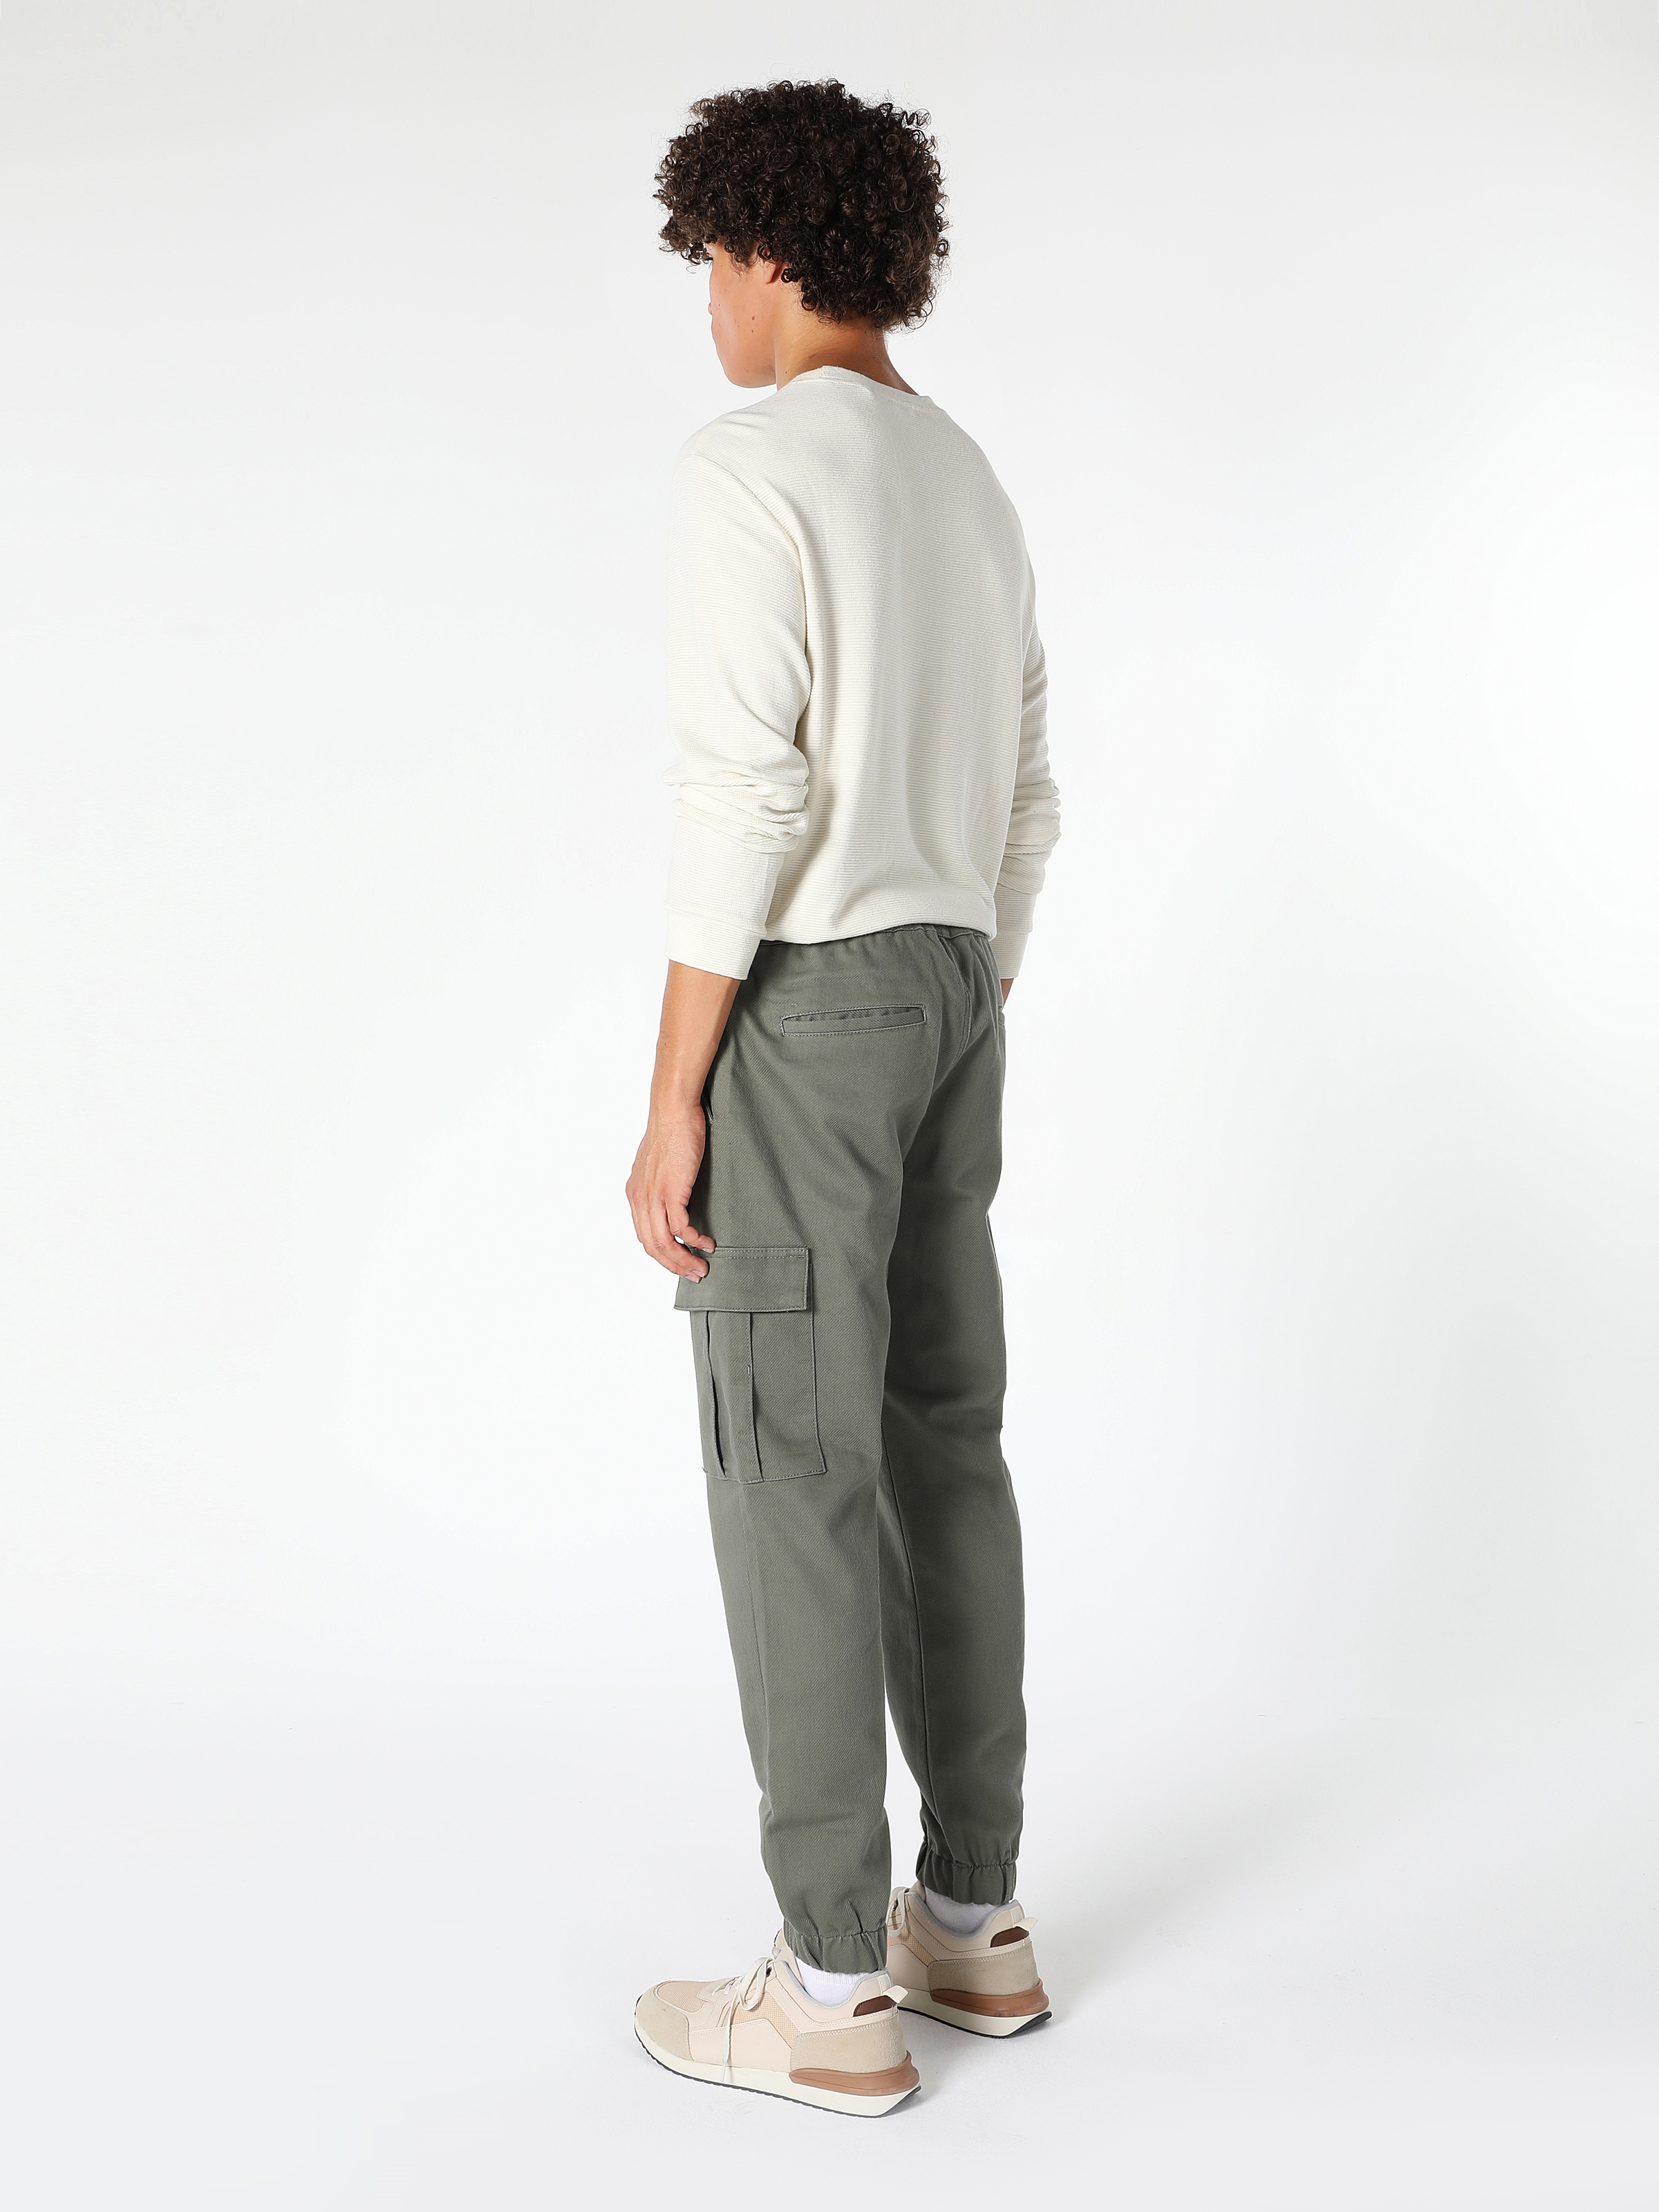 Afișați detalii pentru Pantaloni De Barbati Kaki Slim Fit  CL1061151